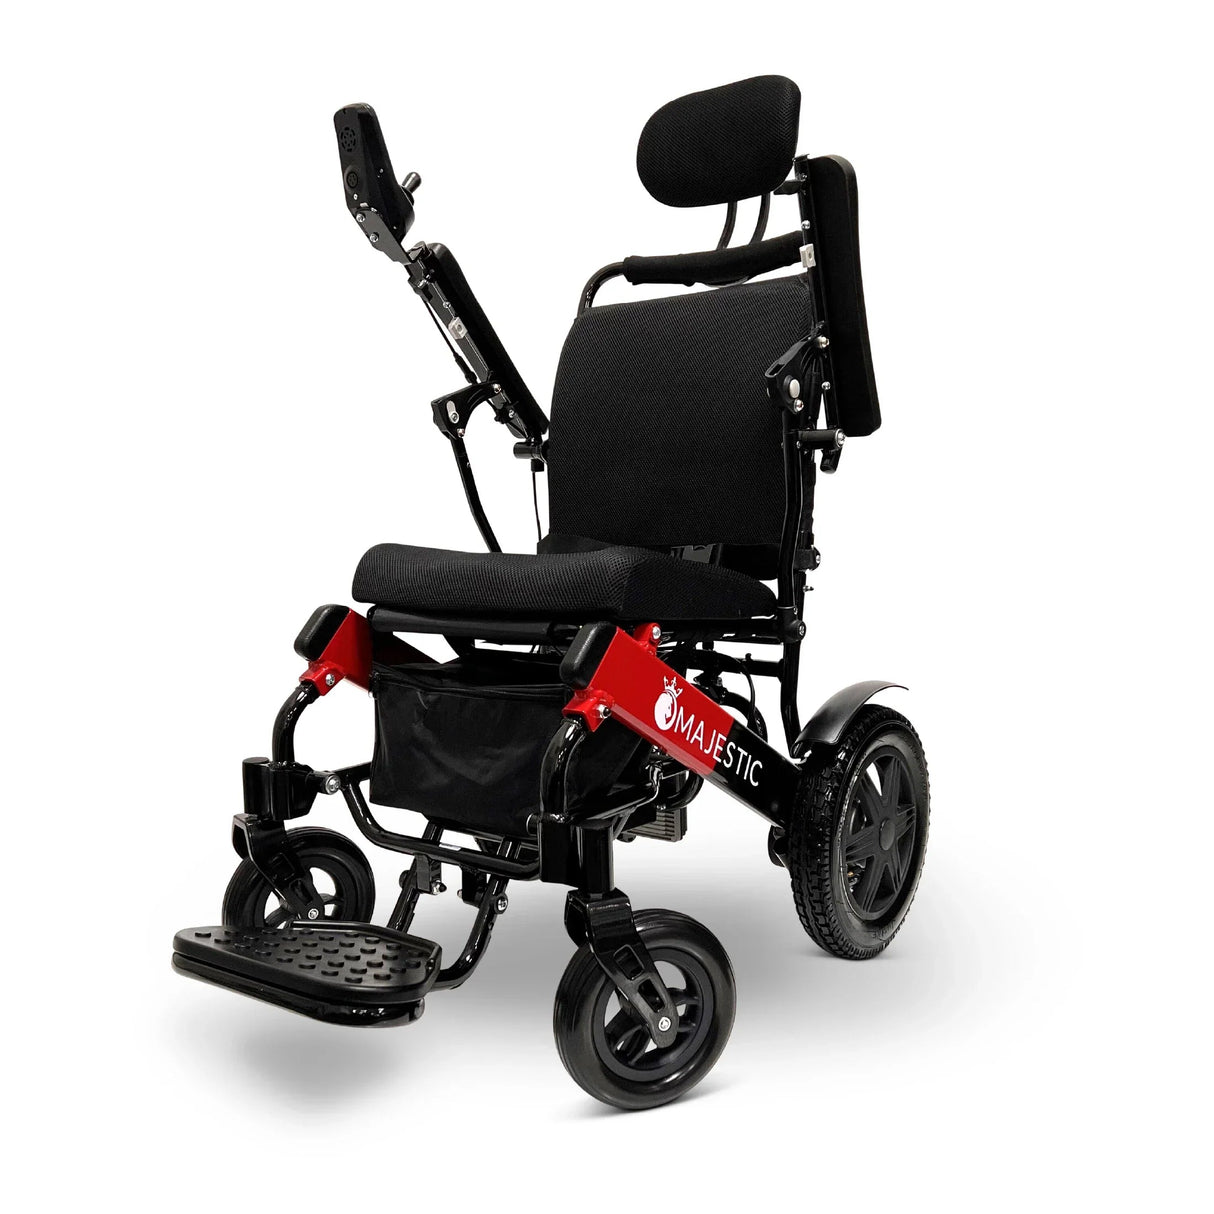 ComfyGo MAJESTIC IQ-9000 Auto Recline Remote Controlled Electric Wheelchair